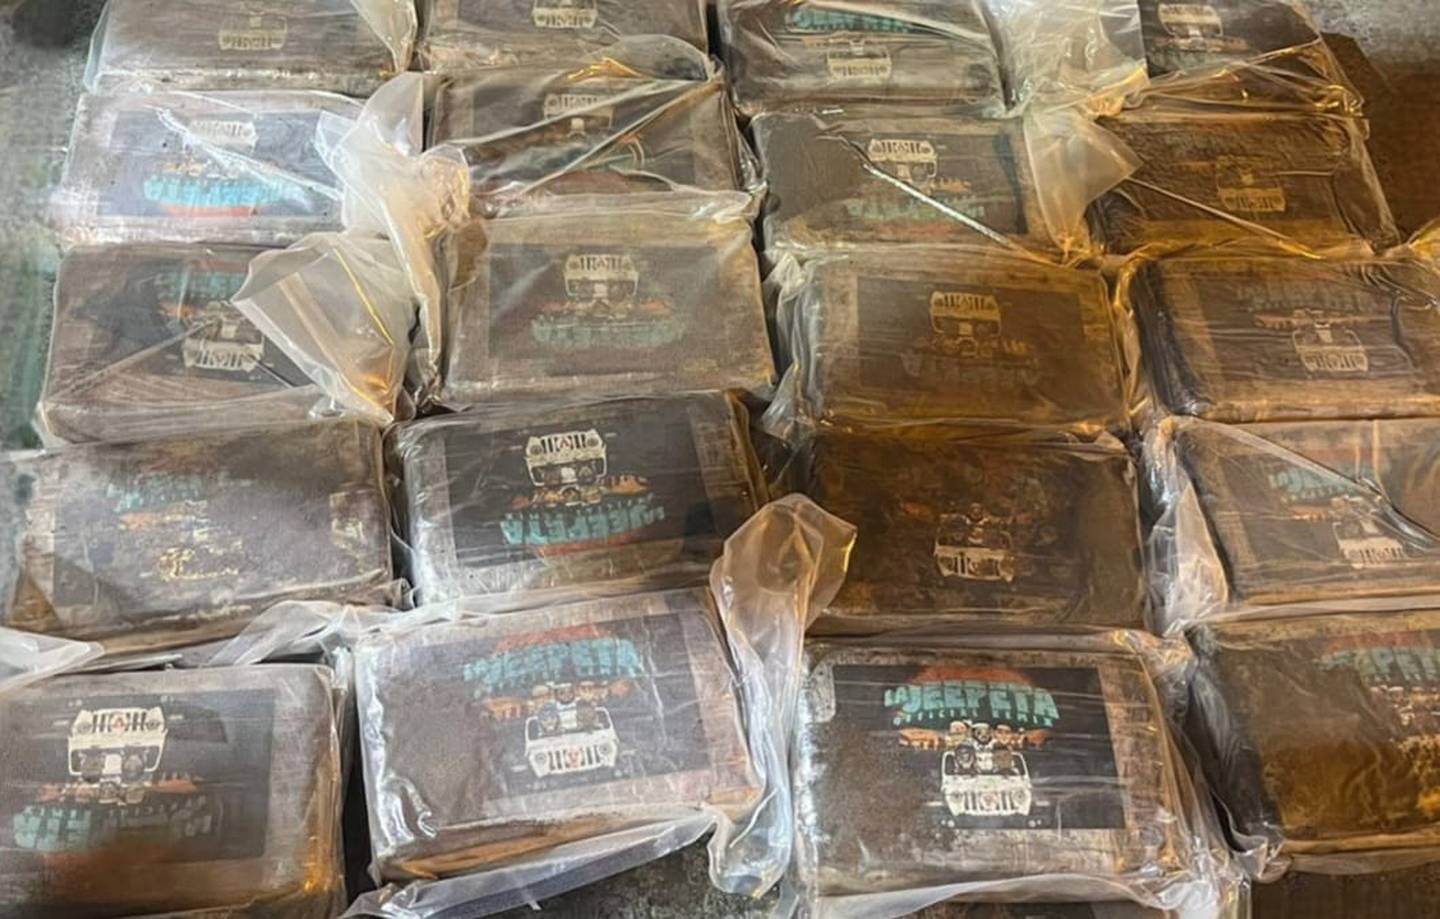 Decomisan 462 kilógramos de cocaína en contenedor en Limón. Foto MSP.